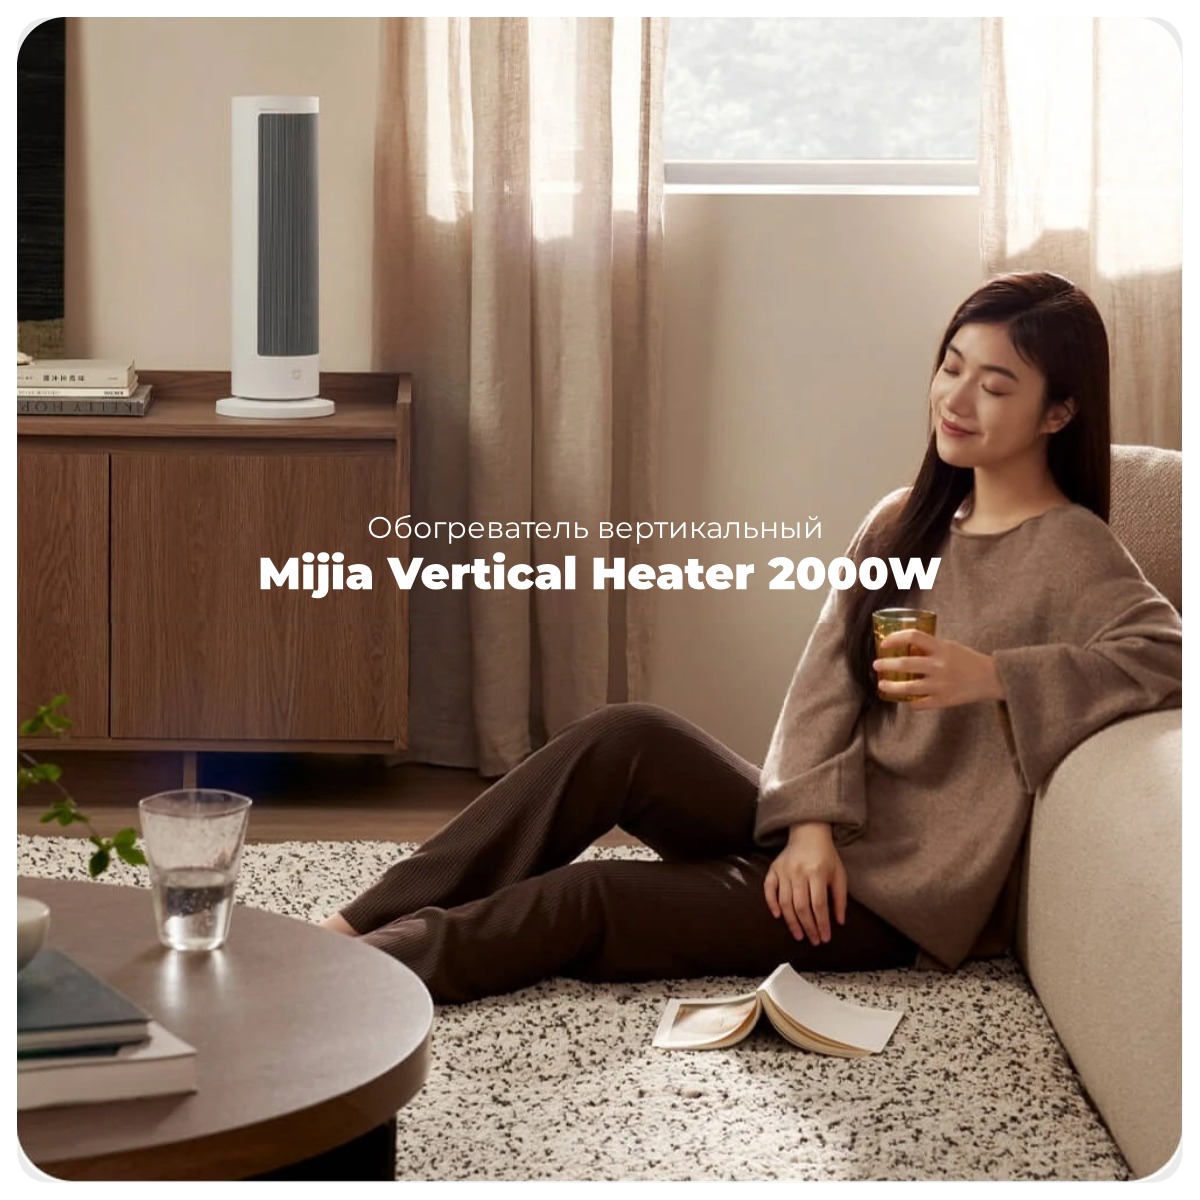 Mijia-Vertical-Heater-2000W-01